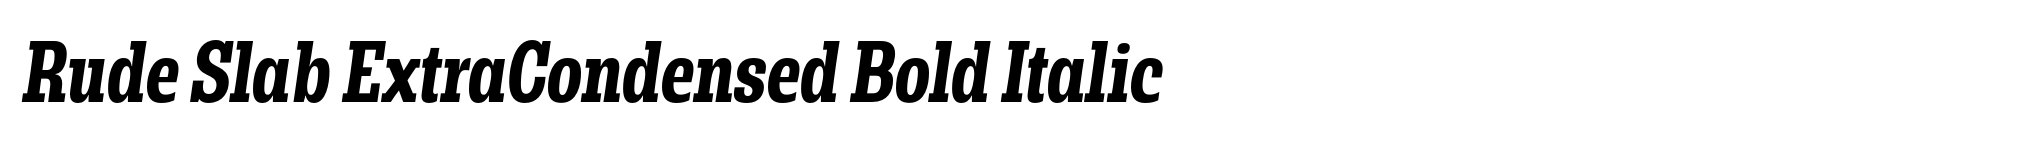 Rude Slab ExtraCondensed Bold Italic image